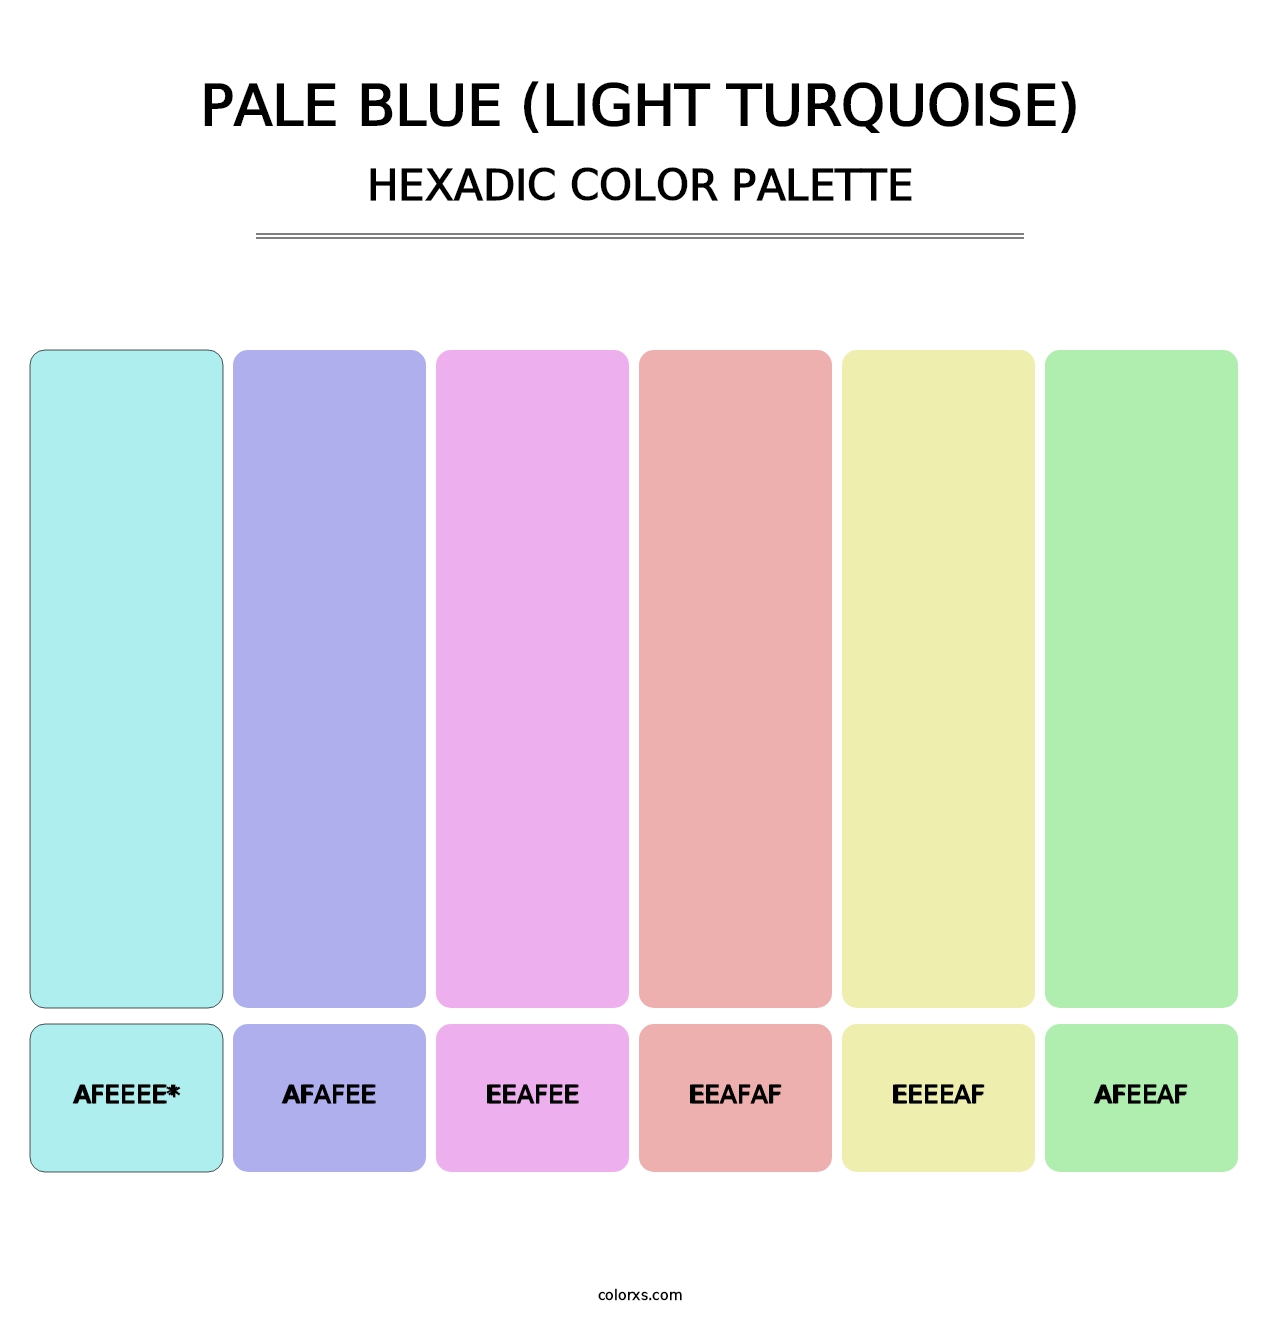 Pale Blue (Light Turquoise) - Hexadic Color Palette